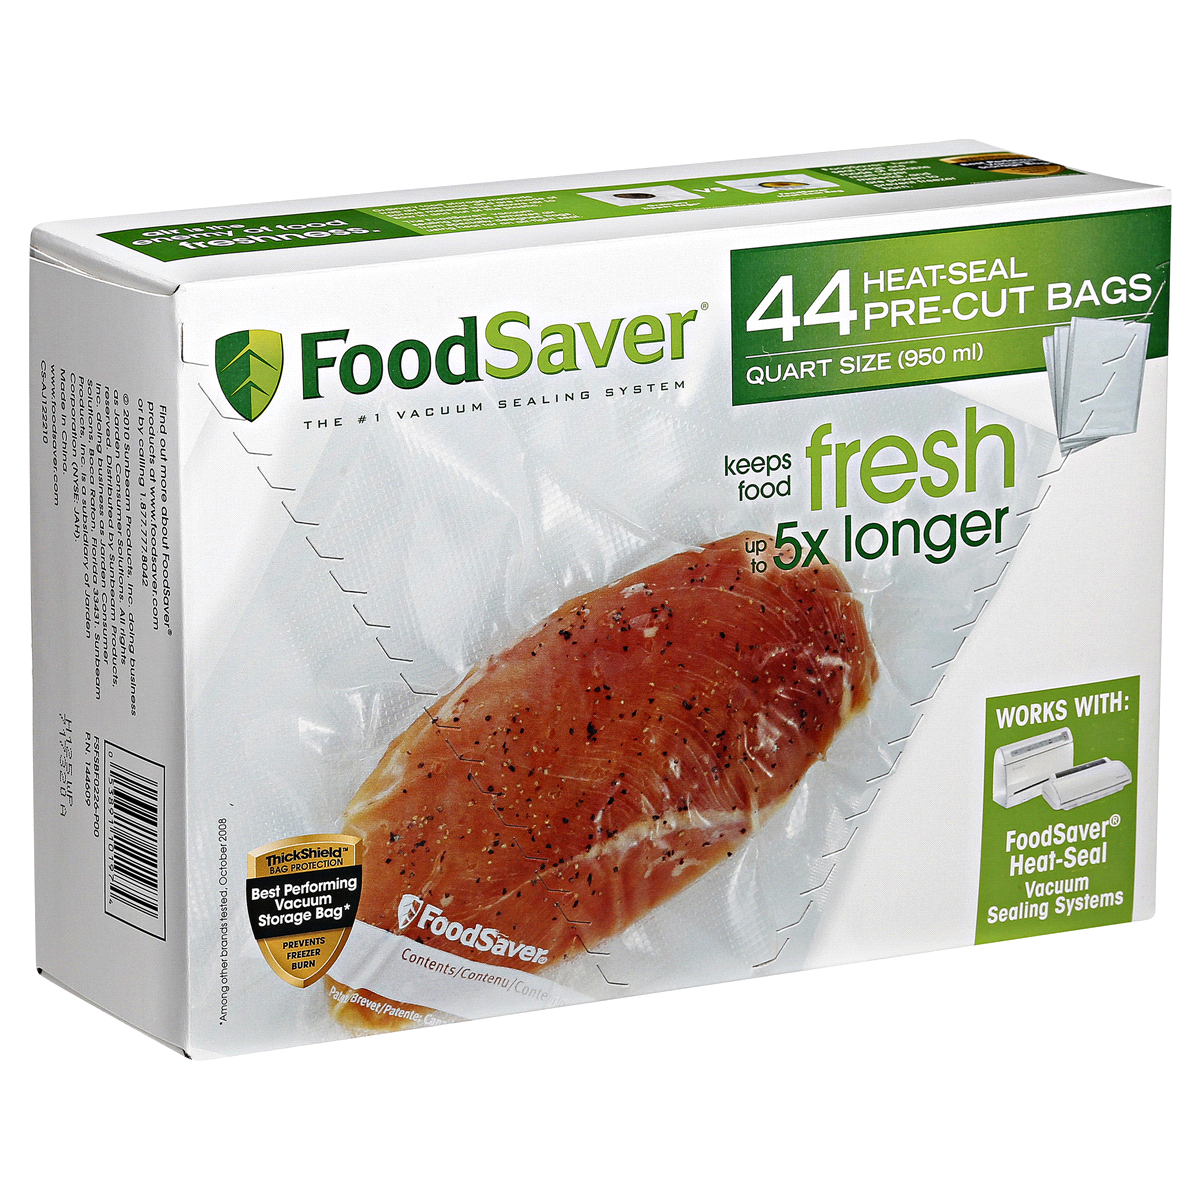 slide 3 of 8, FoodSaver Quart Heat Seal Bags, FSFSBF0226-P00, 44 ct